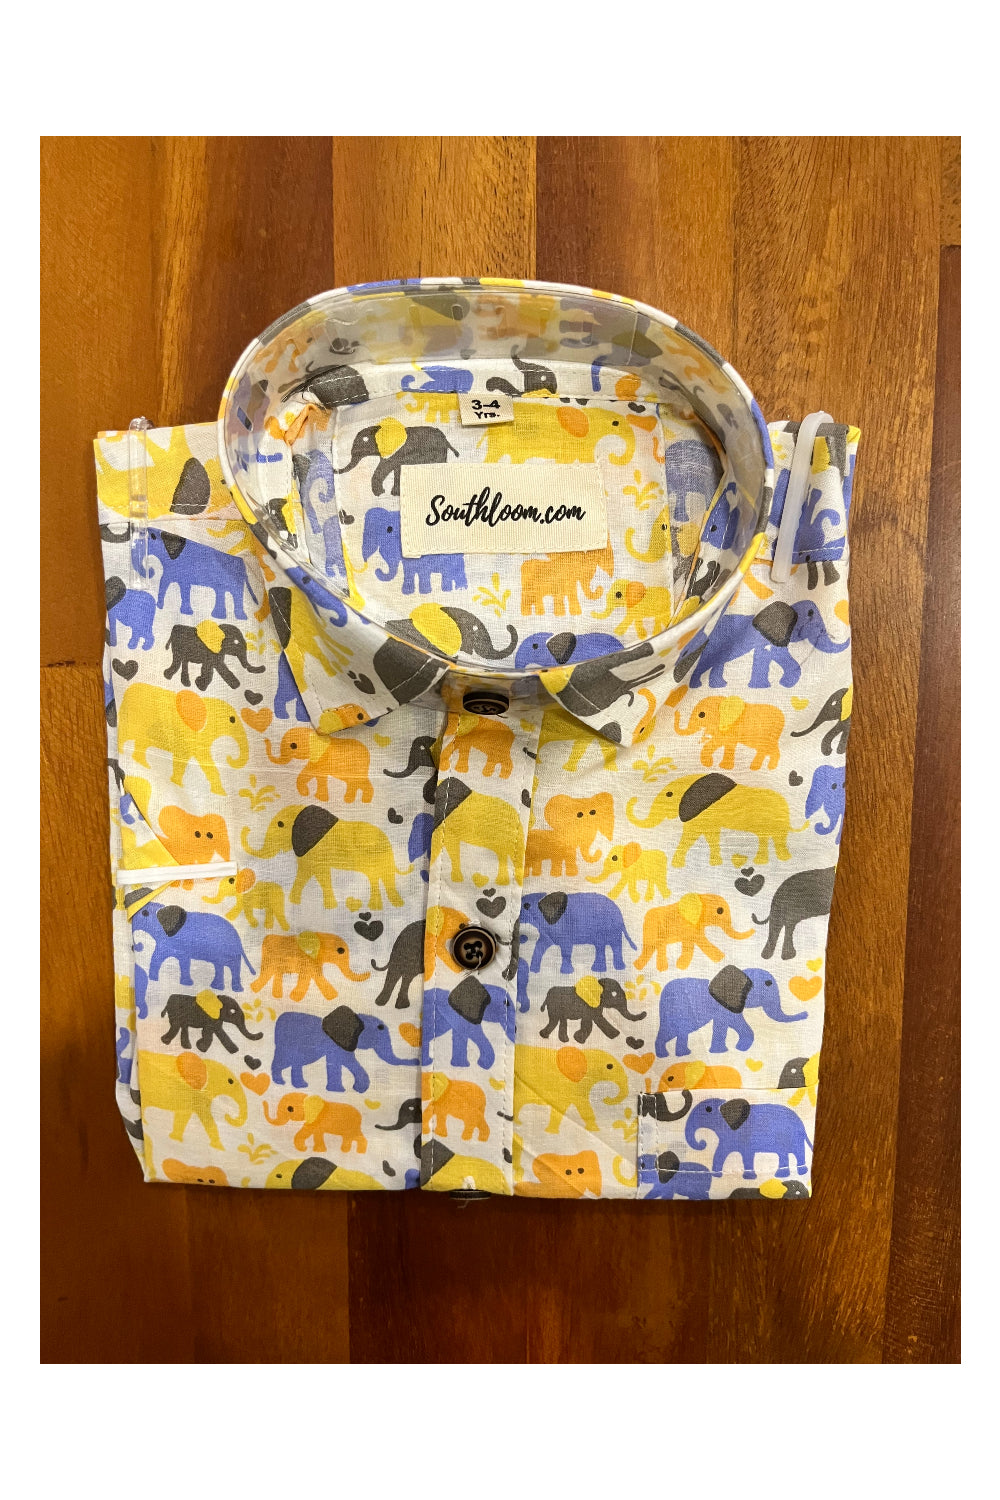 Southloom Jaipur Cotton Yellow Blue Elephant Hand Block Printed Shirt For Kids (Half Sleeves)